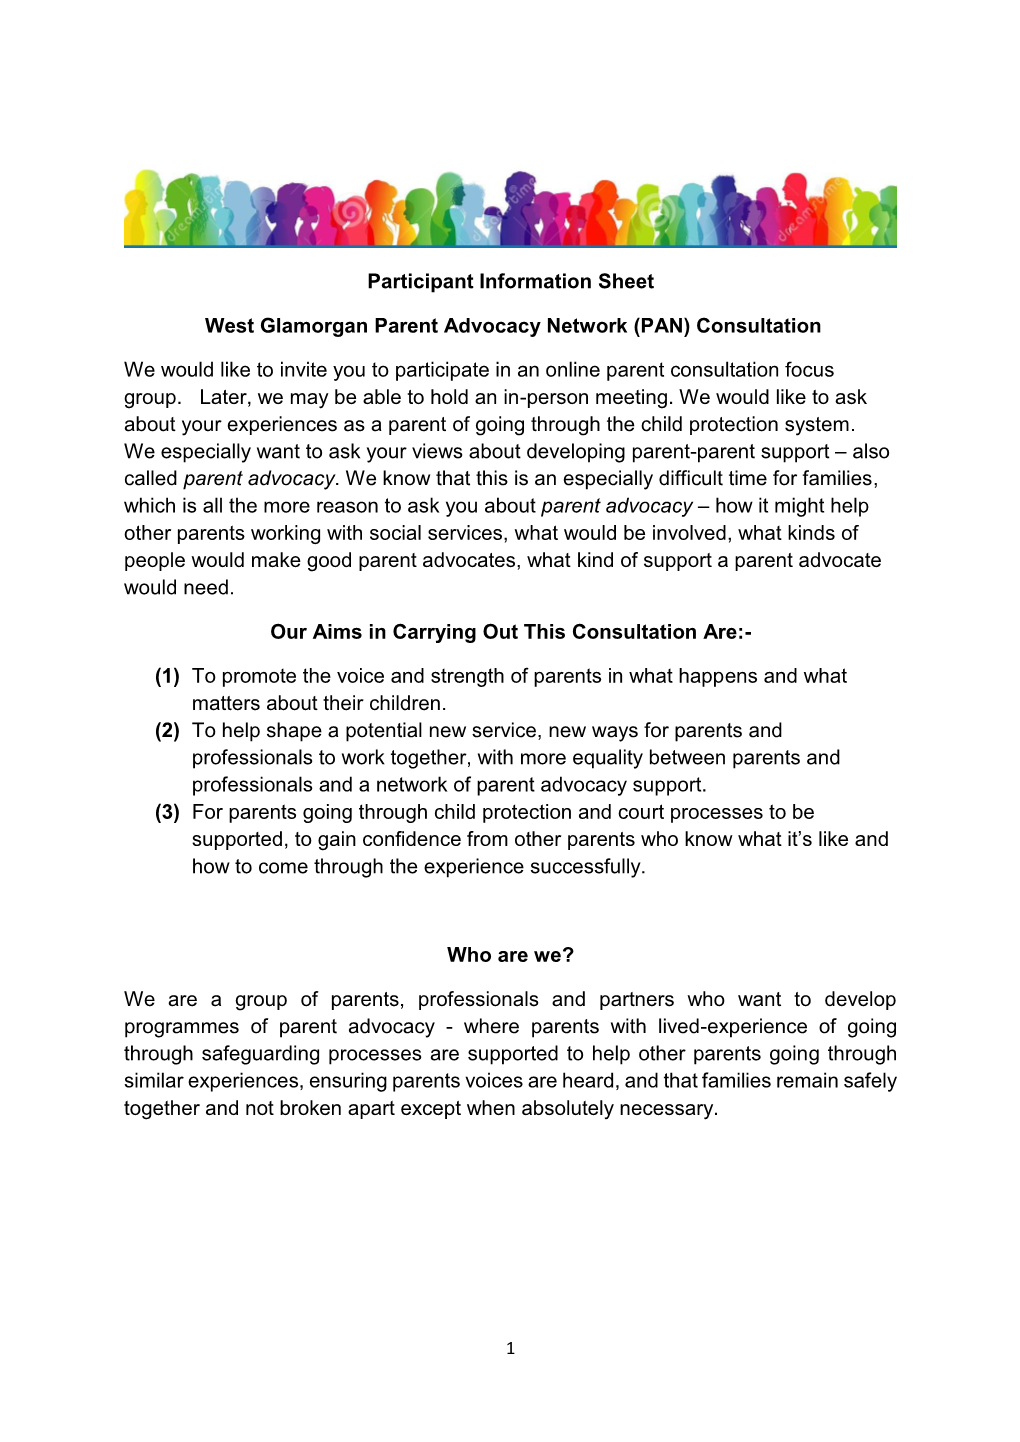 Participant Information Sheet West Glamorgan Parent Advocacy